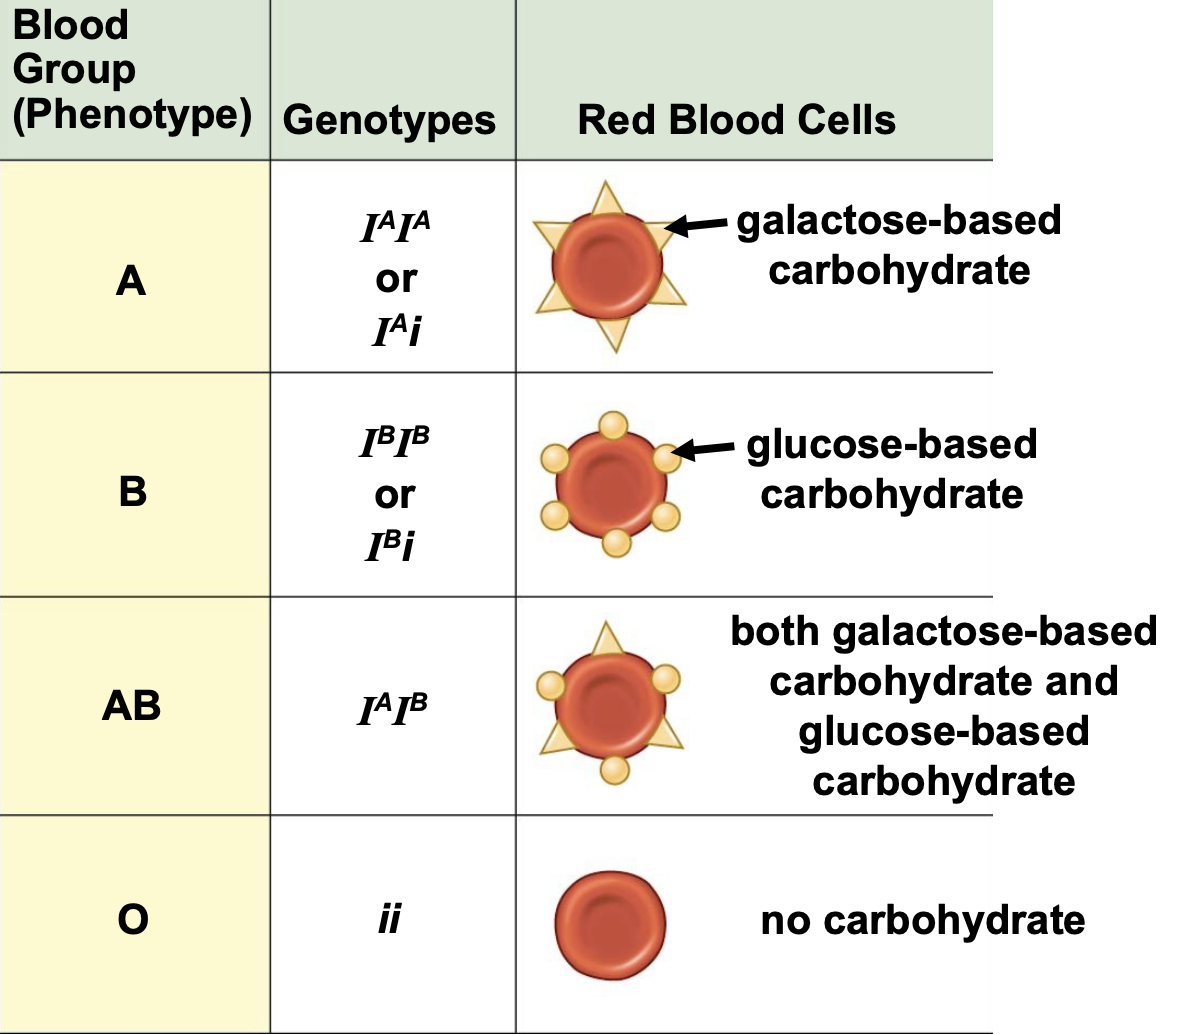 <p>Phenotype: A, B, AB, O</p><p>Genotype: I^A I^A, I^A i, I^B I^B, I^B i, I^A I^B, ii</p><p>Red Blood cells: Glucose, galactose, both, neither</p>